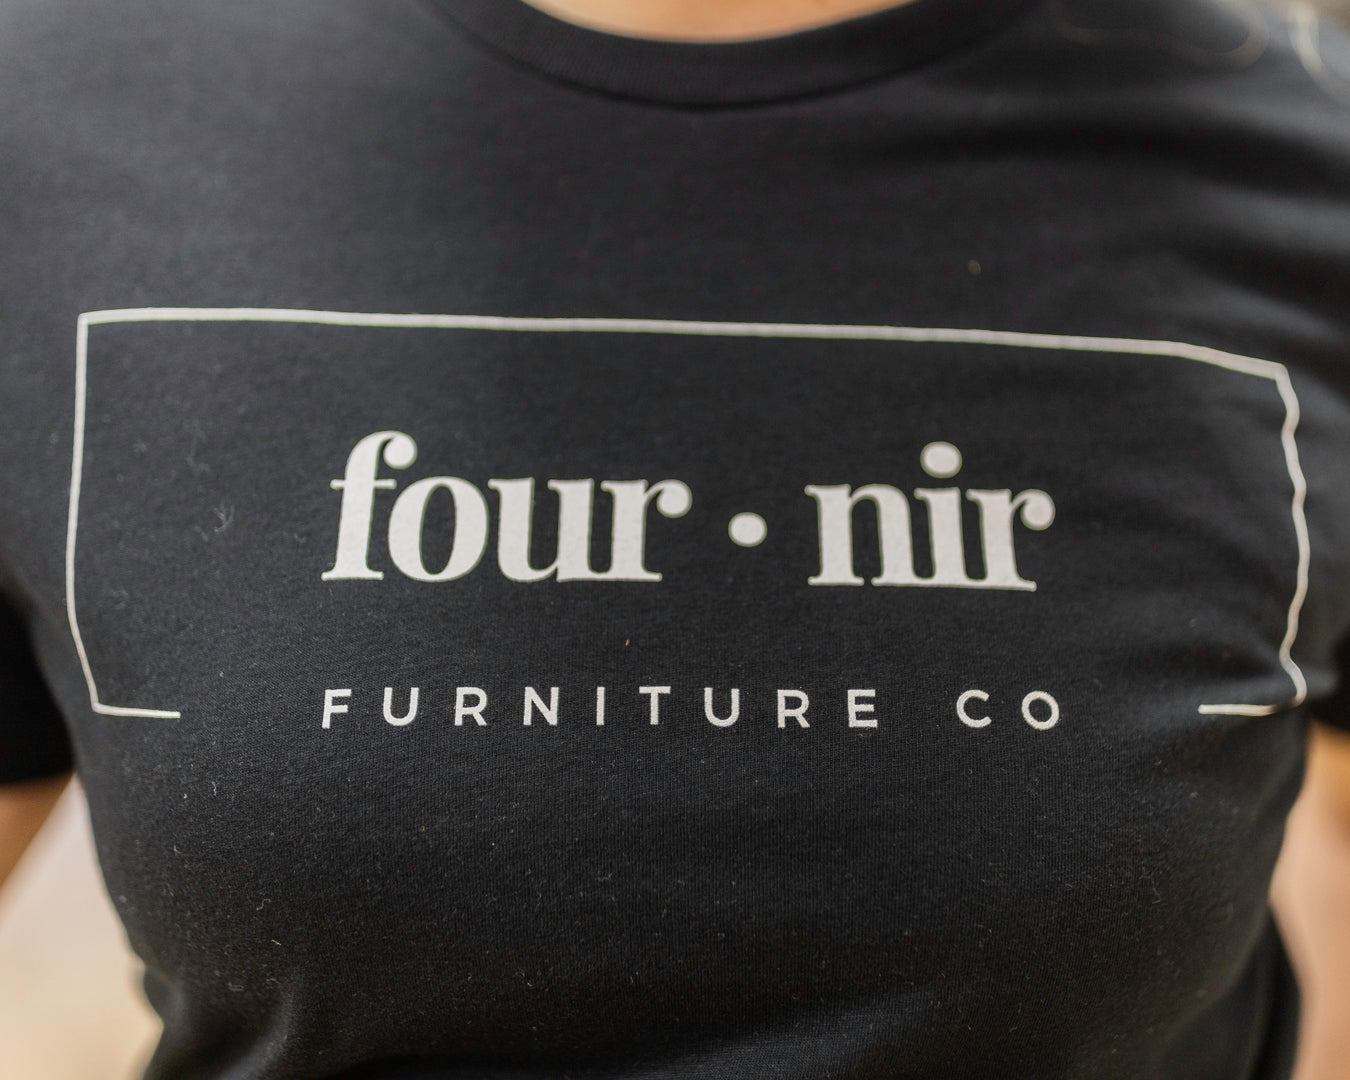 
                  
                    four · nir Furniture Co Short Sleeve T-shirt
                  
                